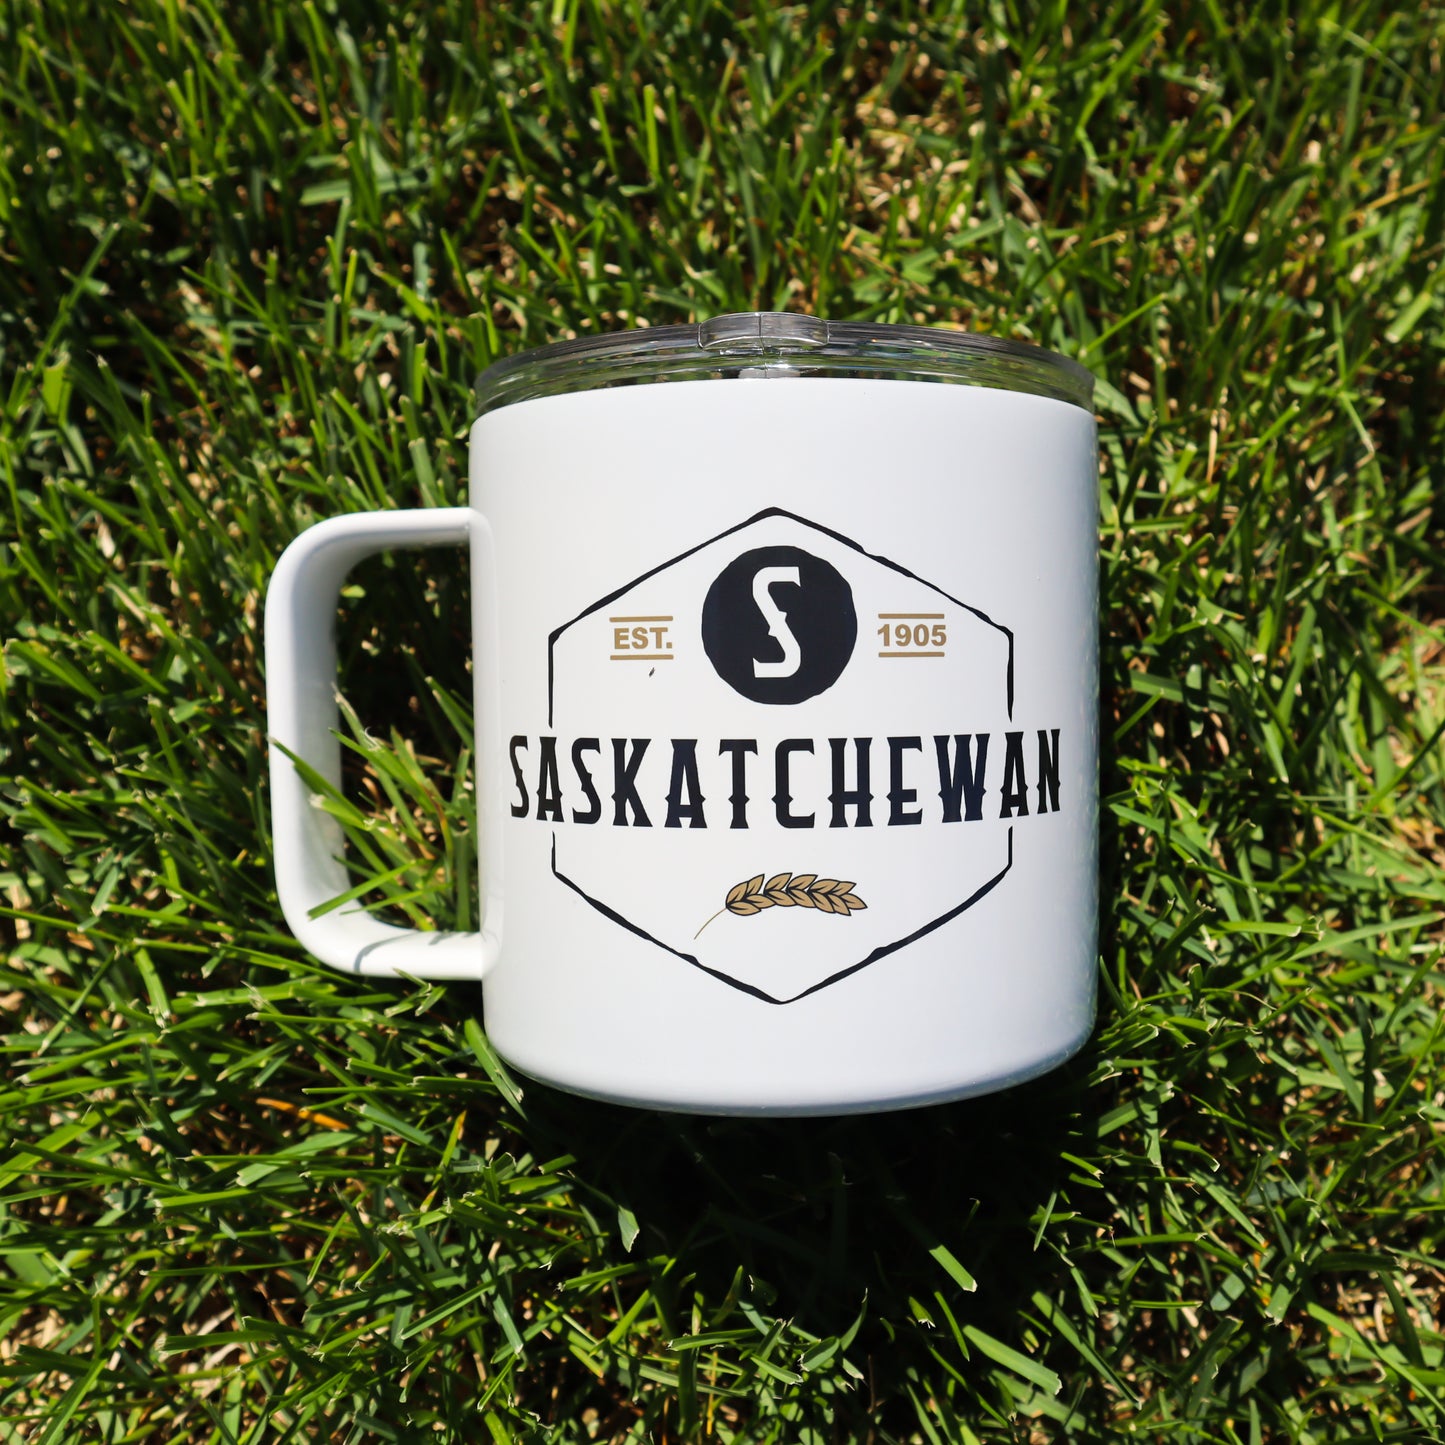 Sask 1905 Stainless Steel 17oz Coffee Mug | Saskatchewan Mug